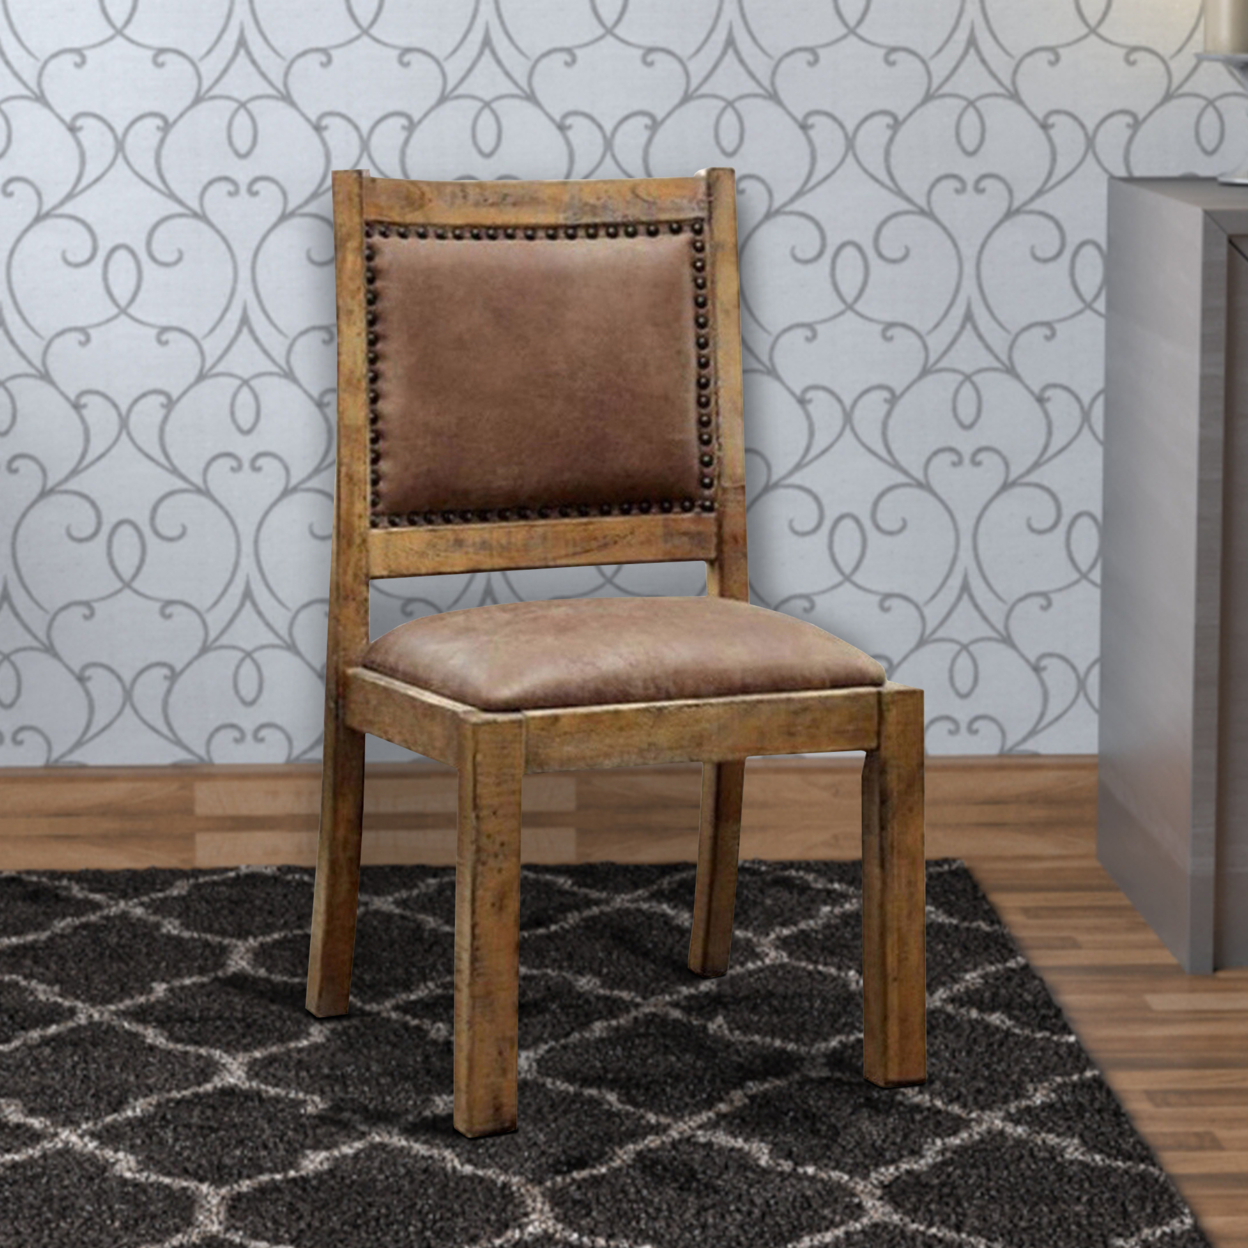 Rustic Wood Dining Chair, Vegan Faux Leather, Nailhead Trim, Set Of 2,Brown- Saltoro Sherpi